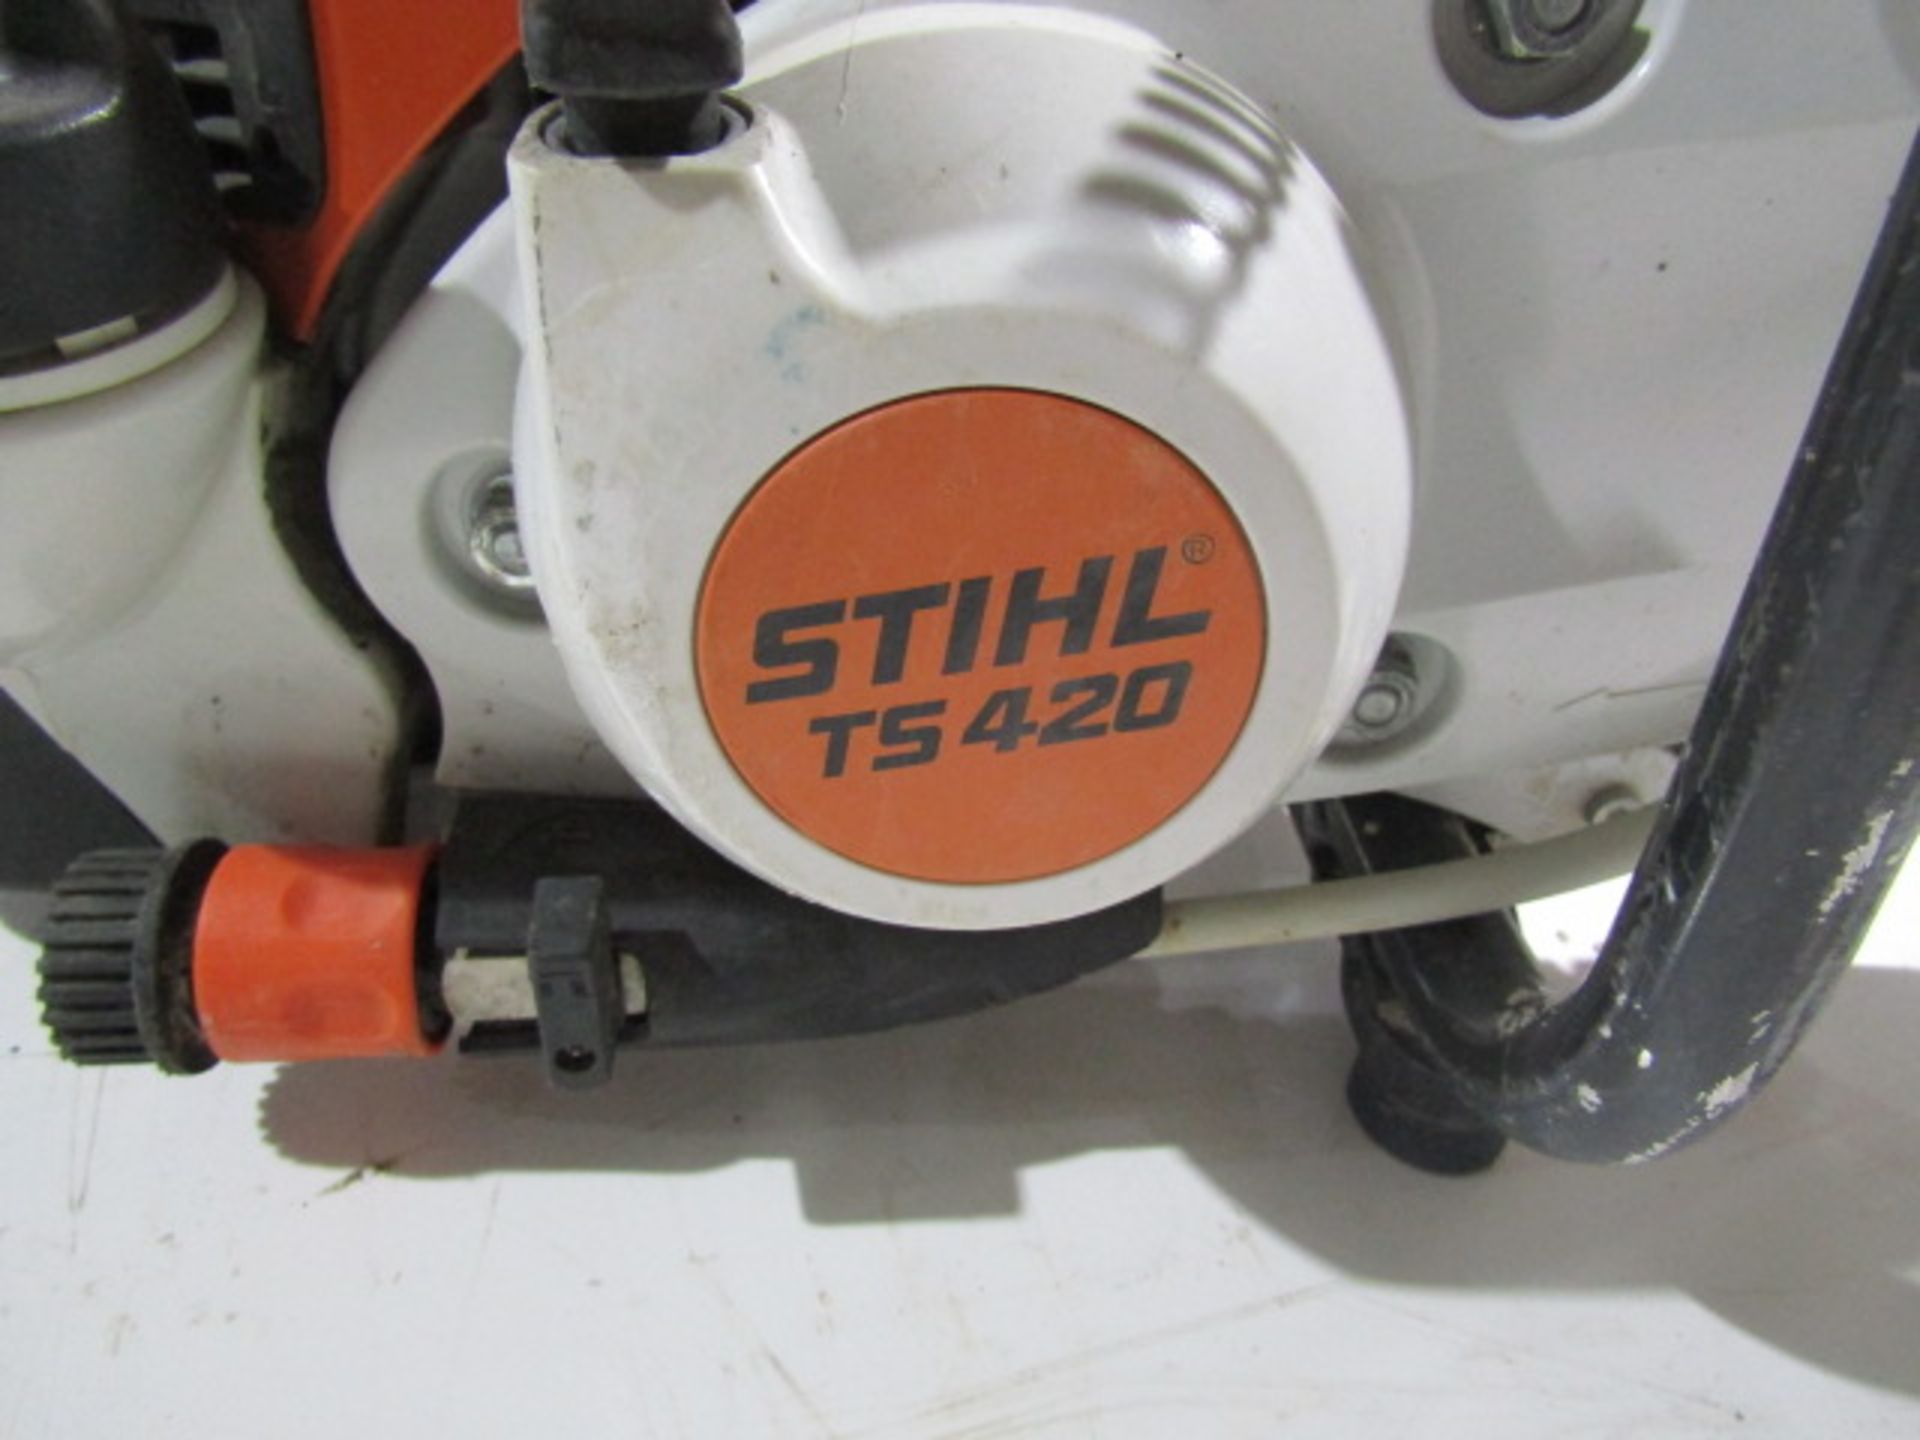 Stihl TS420 Concrete Cut-Off Saw - Image 2 of 2